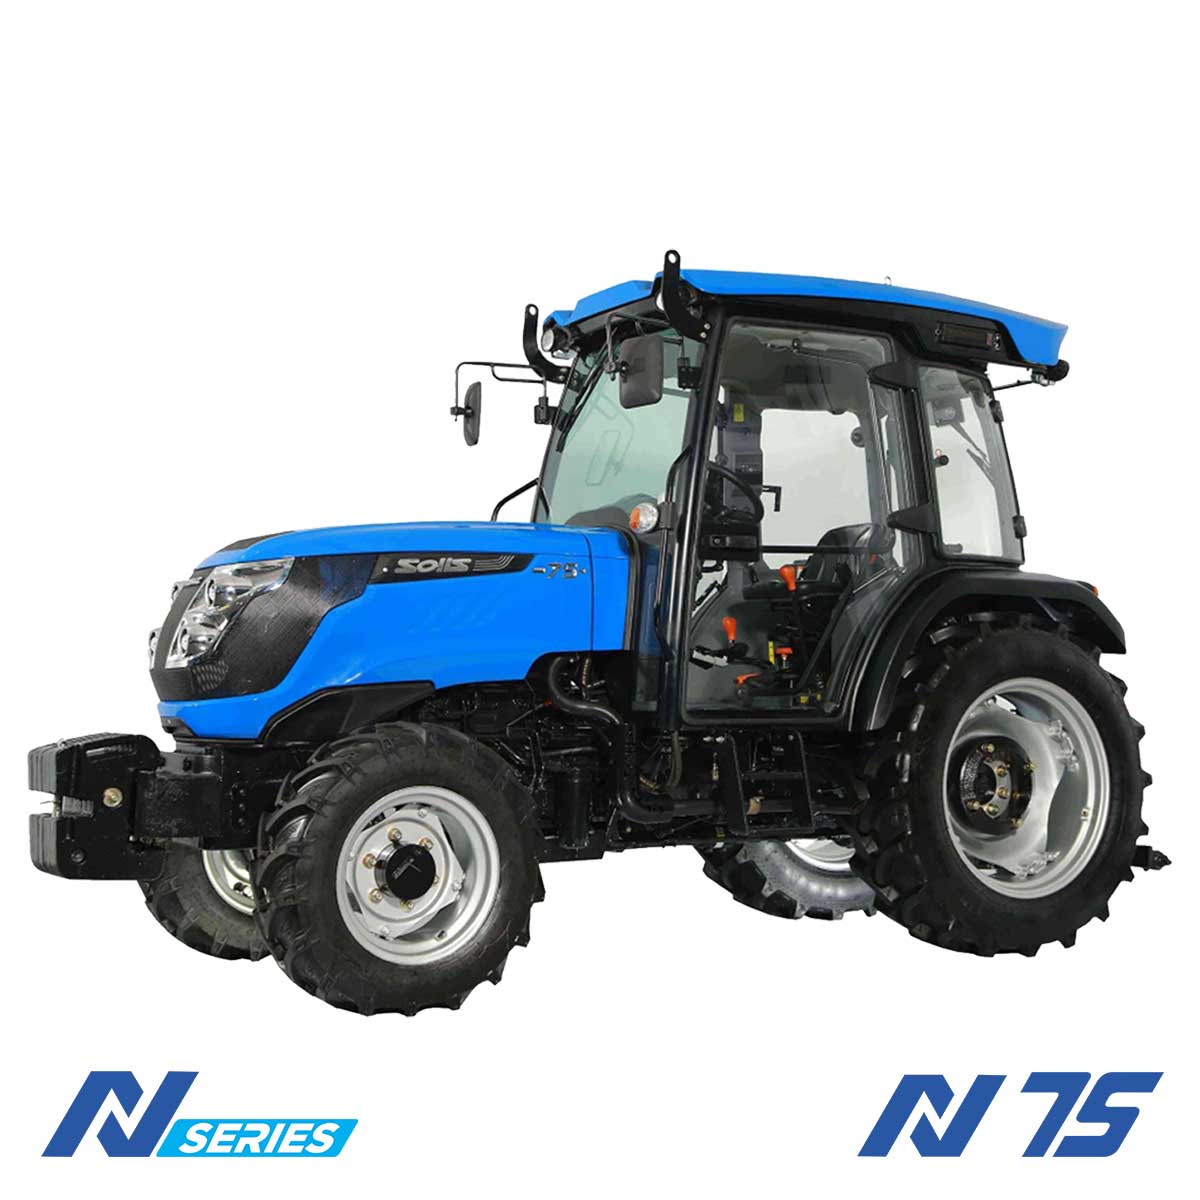 Solis N75 CRDi ültetvényes traktor